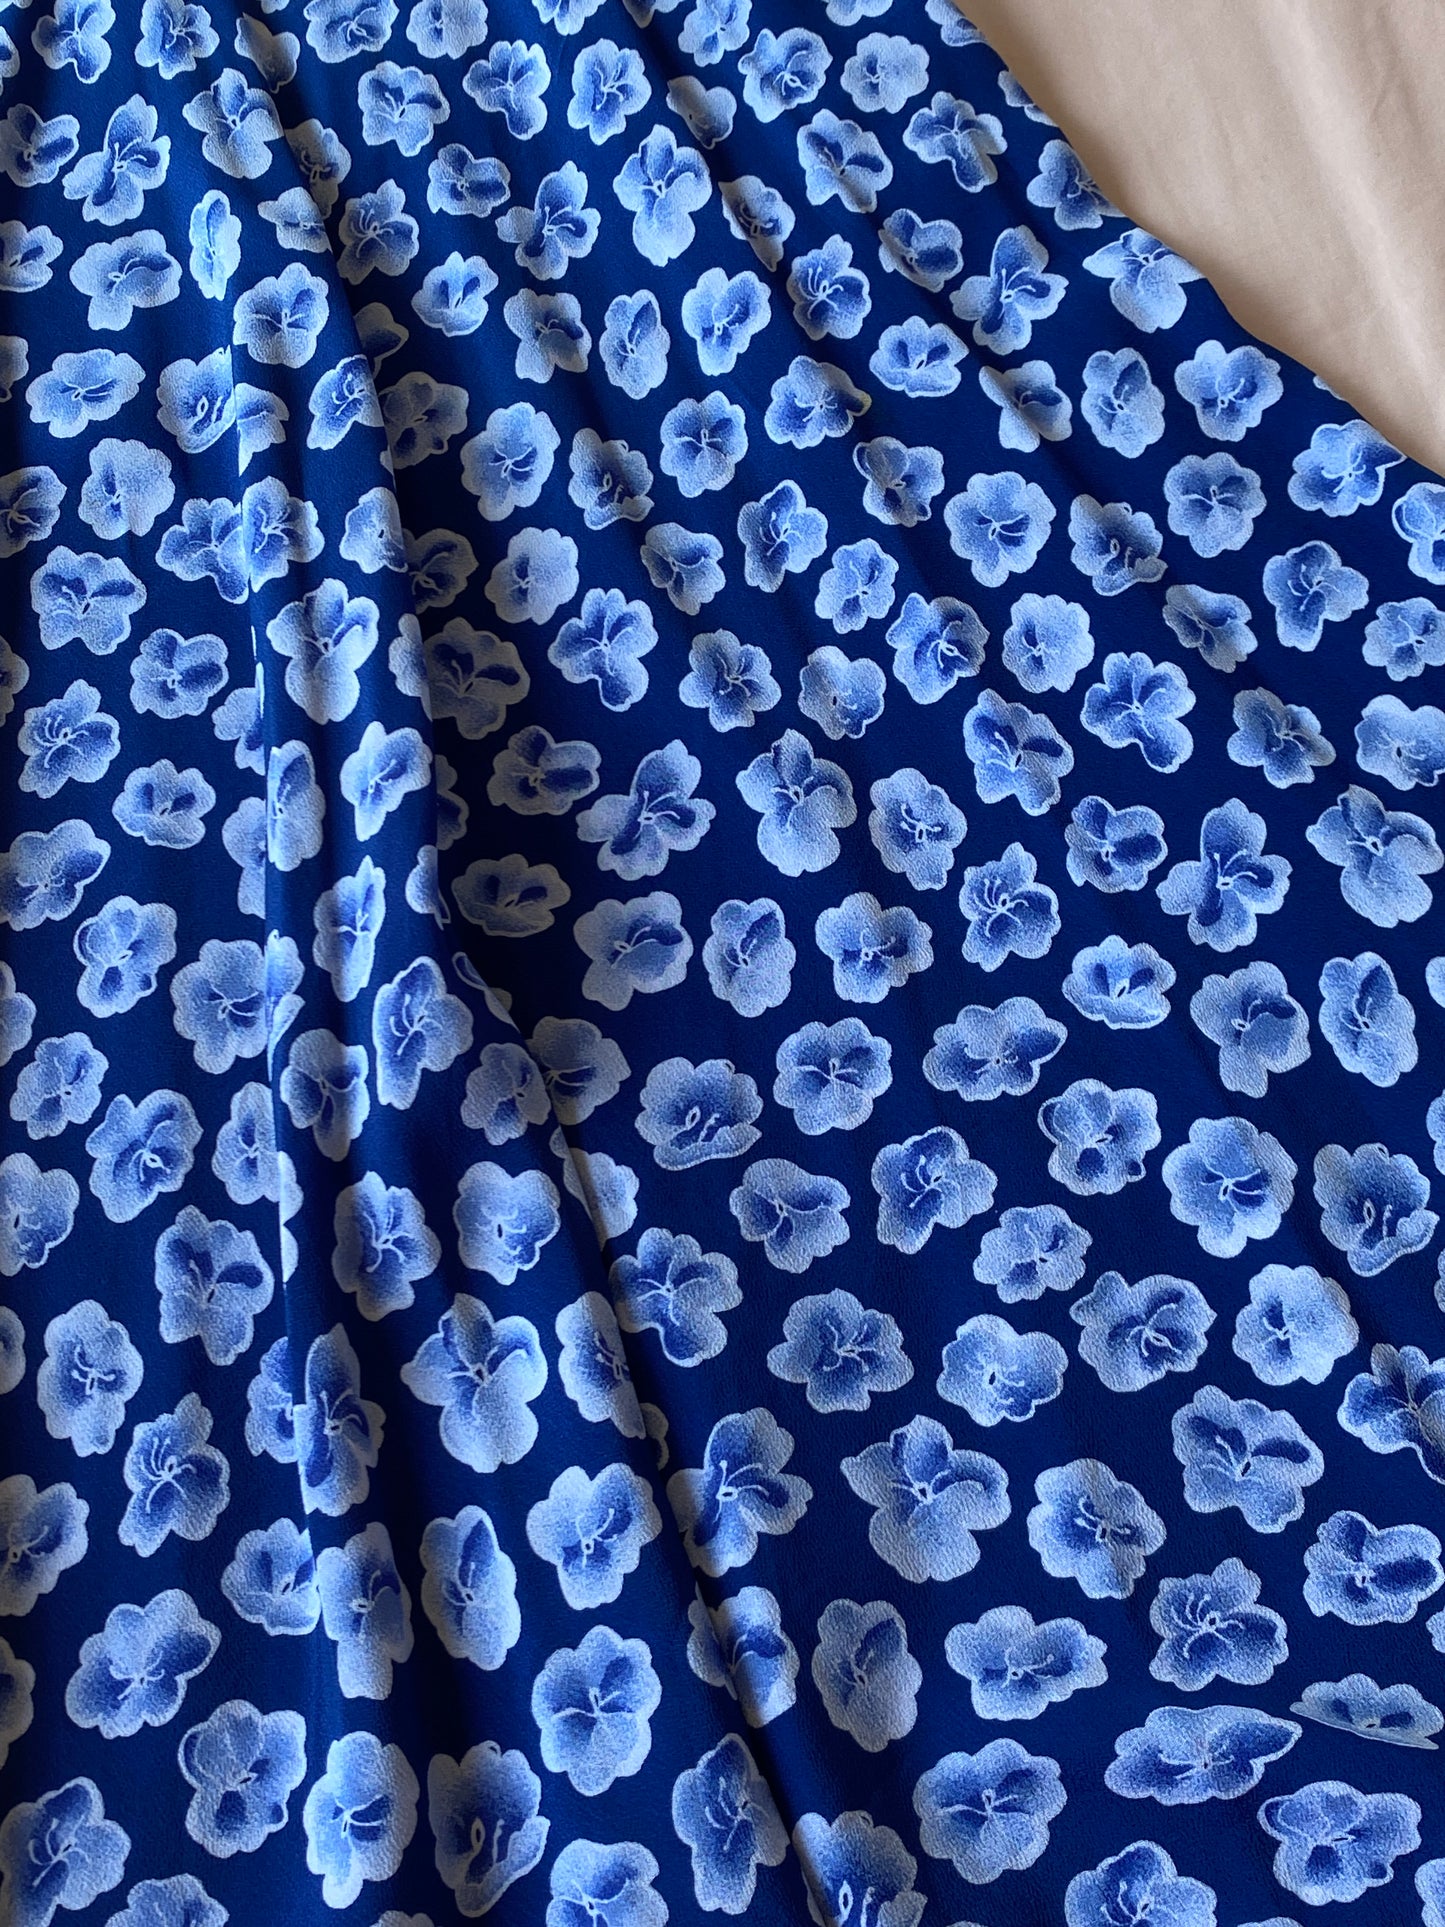 Christian Dior Blue Floral Midi Skirt Size XS